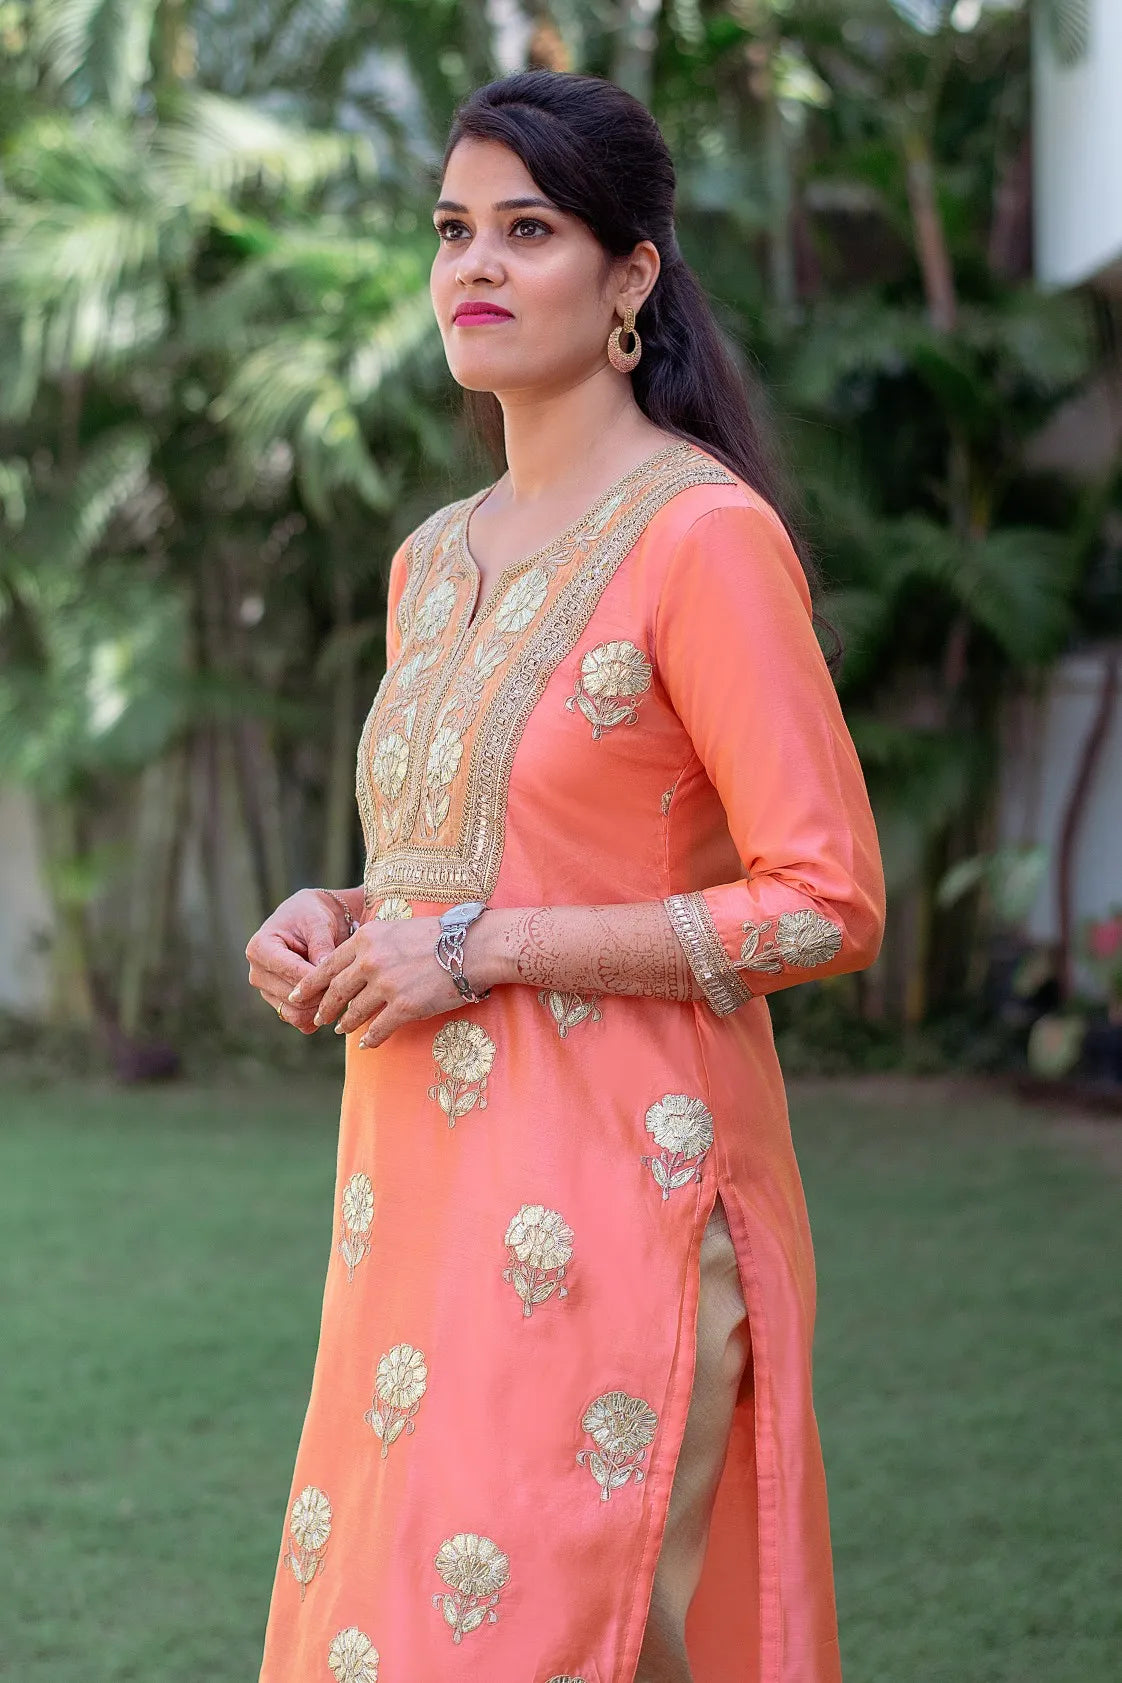 A woman sporting a Peach Chanderi Kurta and Dupatta with delicate Gota Work, along with a Golden Churidar.